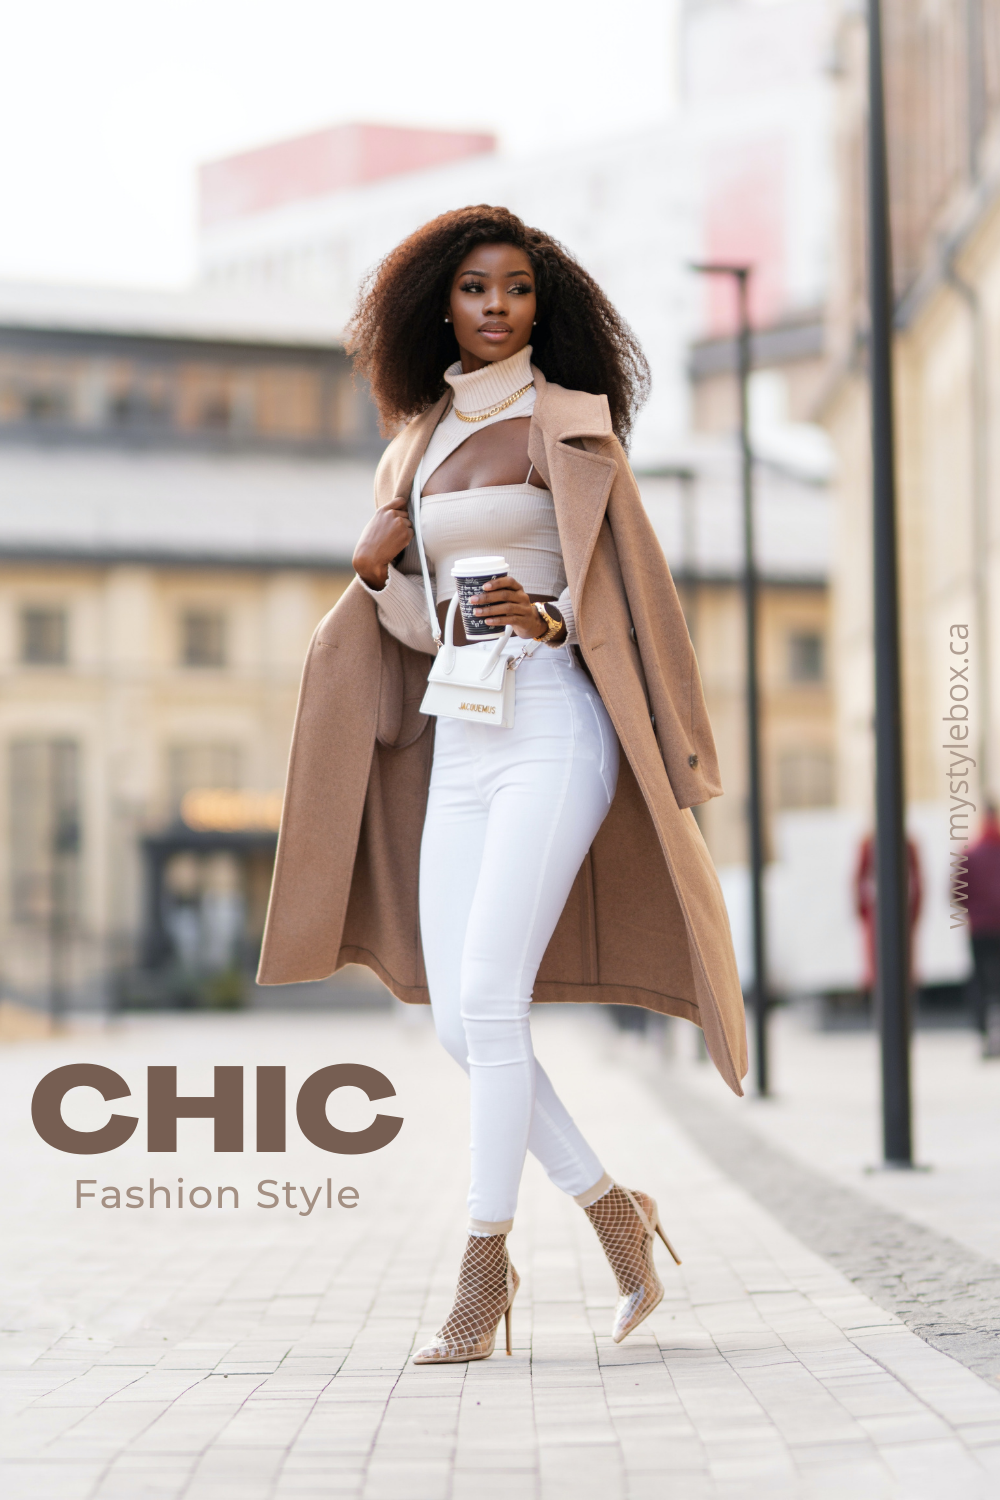 Chic Fashion Style: Effortless Elegance & Sophistication